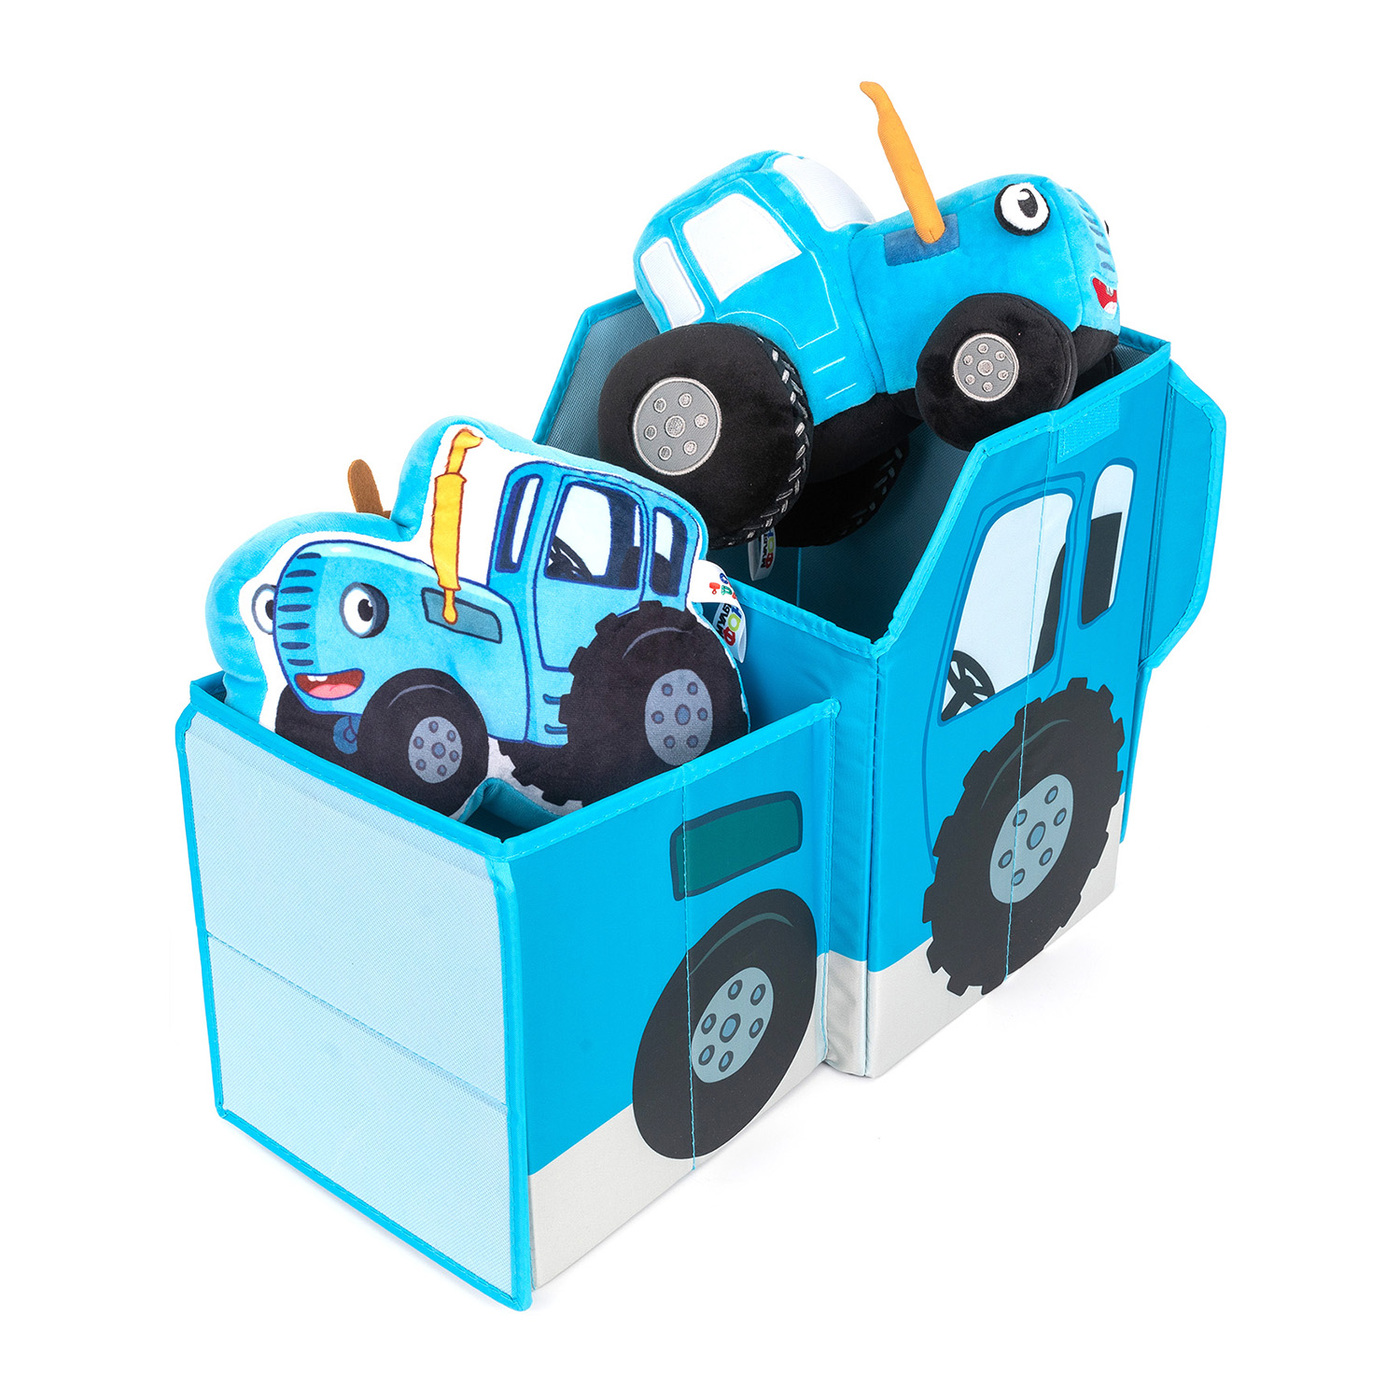 Синий трактор игрушка